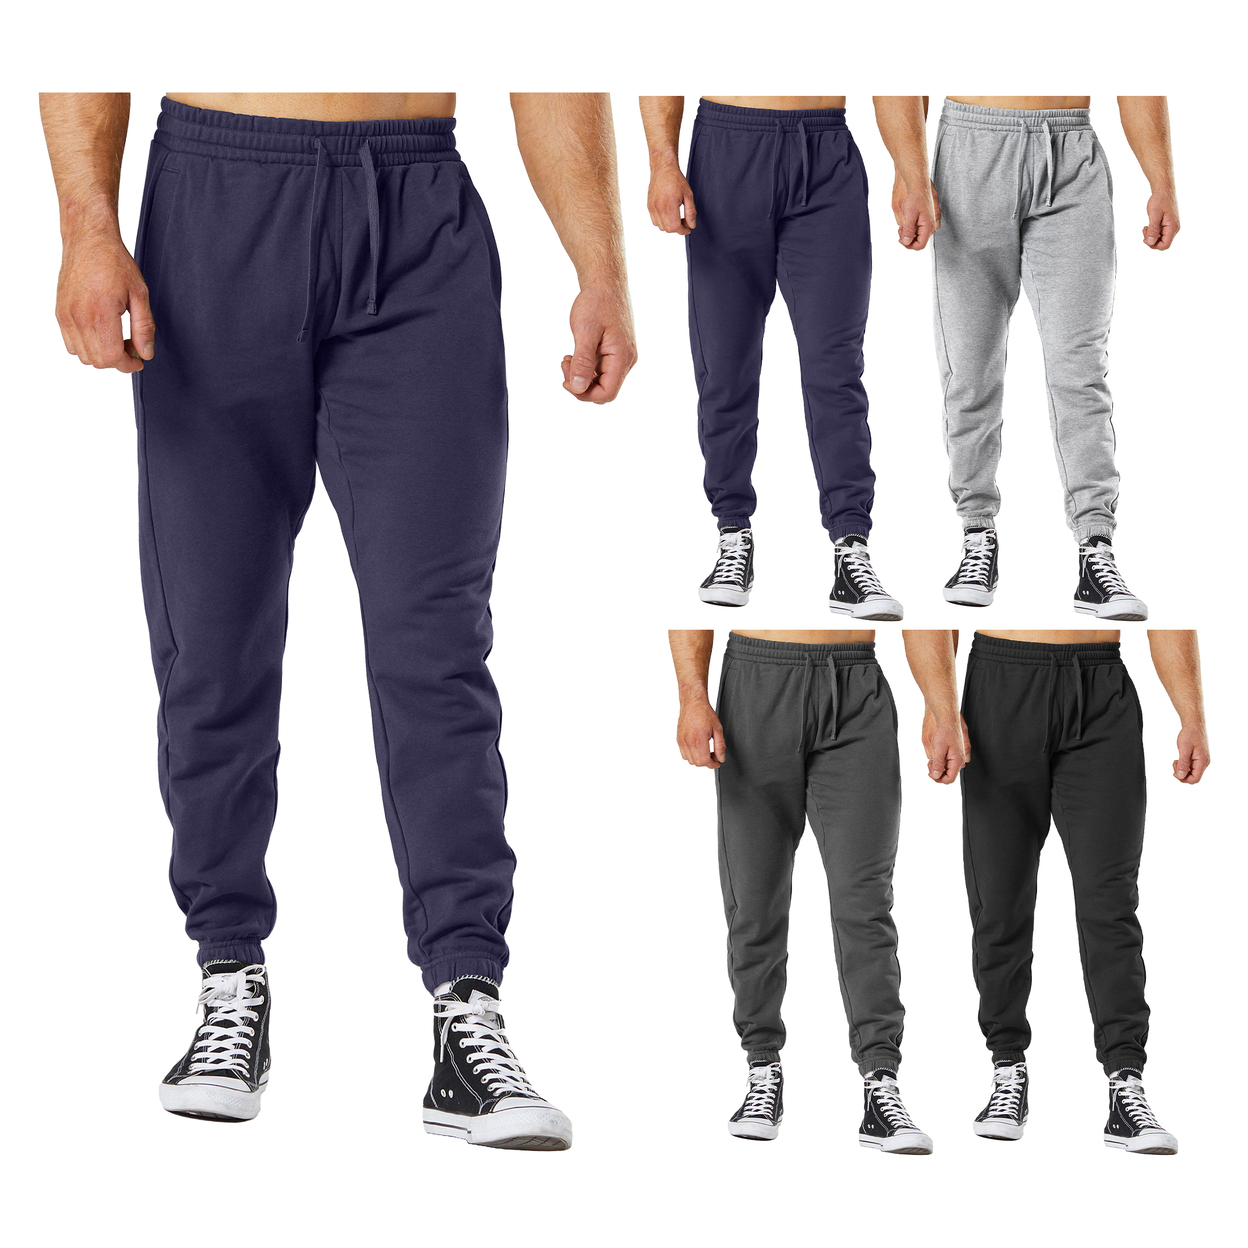 Men's Ultra-Soft Cozy Winter Warm Casual Fleece Lined Sweatpants Jogger - Charcoal, X-large